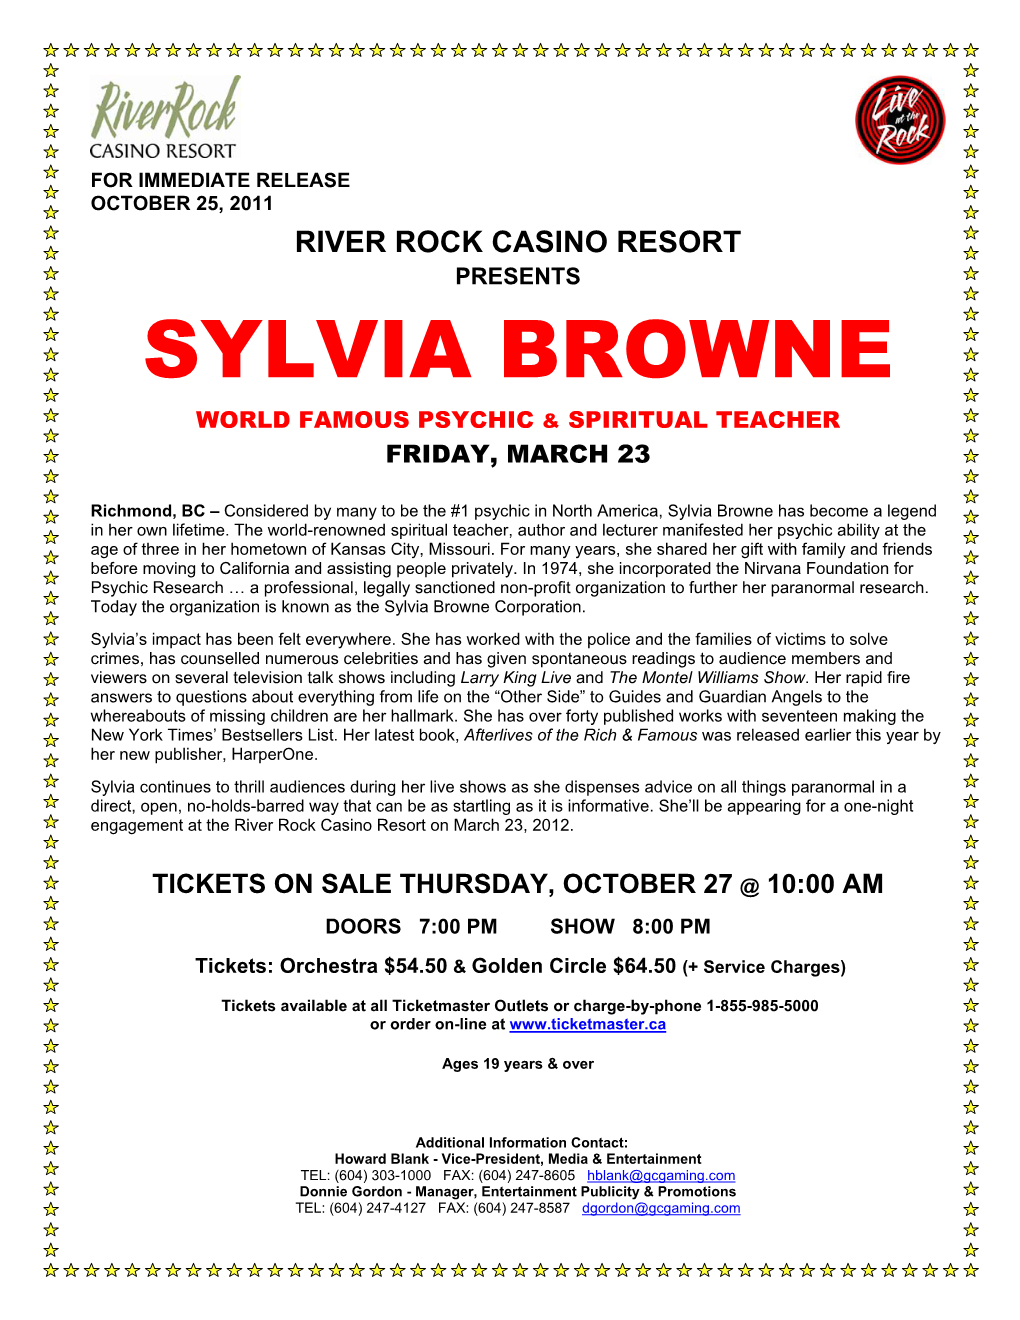 Sylvia Browne World Famous Psychic & Spiritual Teacher Friday, March 23